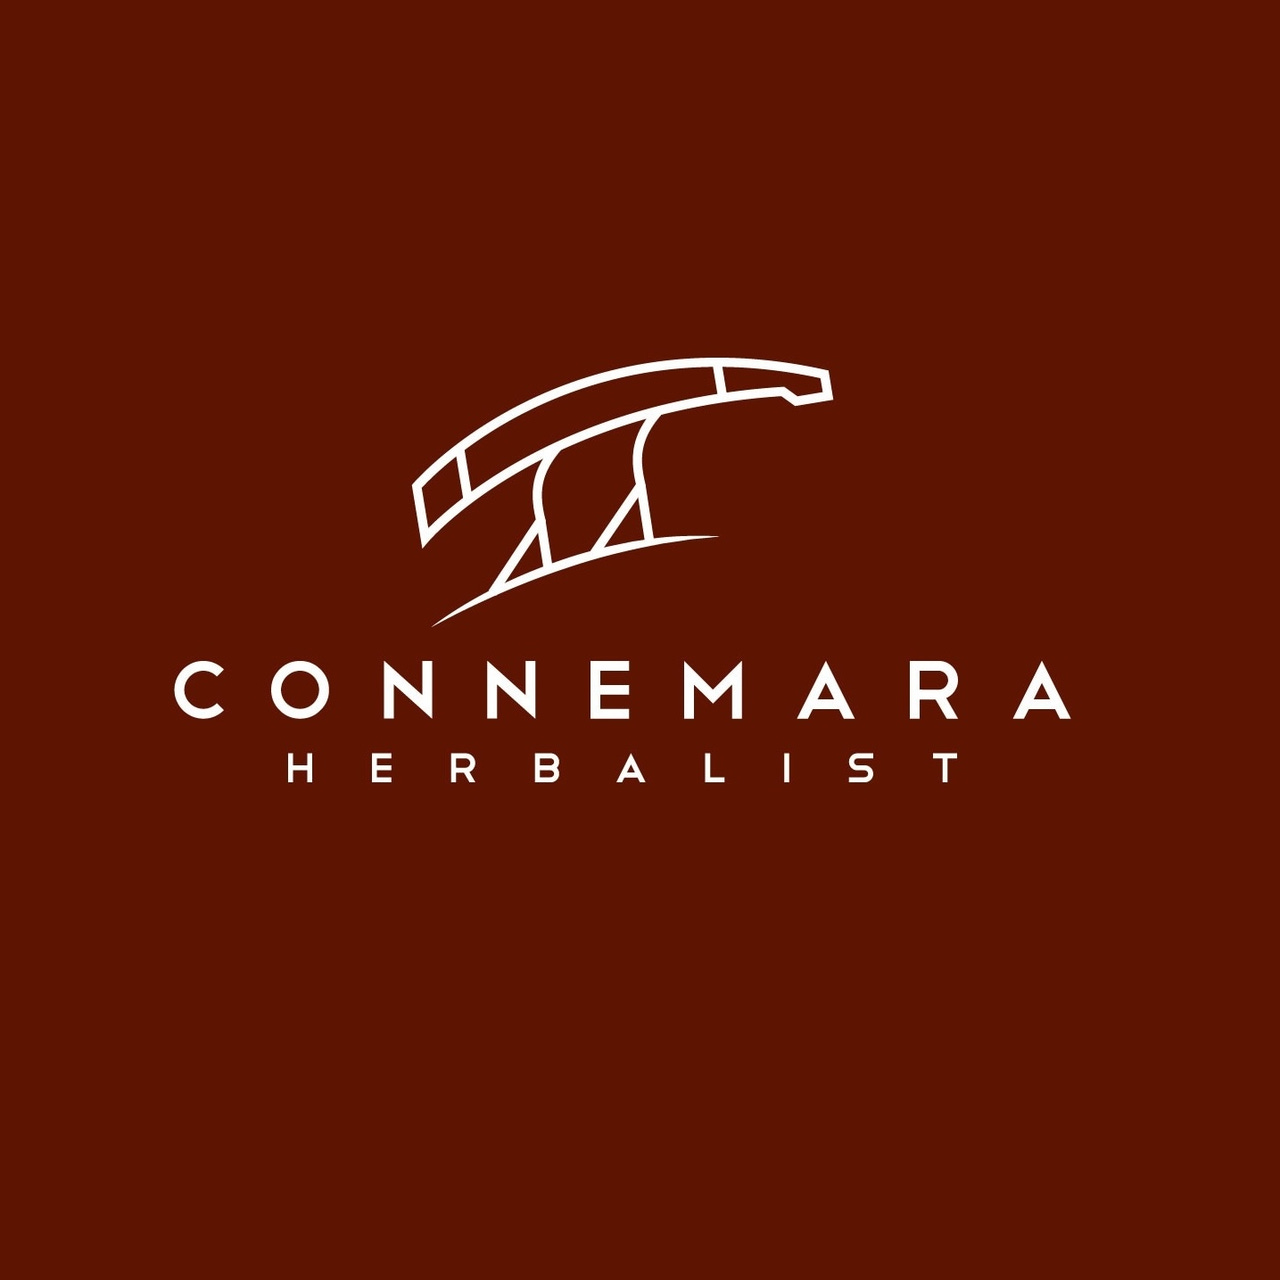 Connemara Herbalist